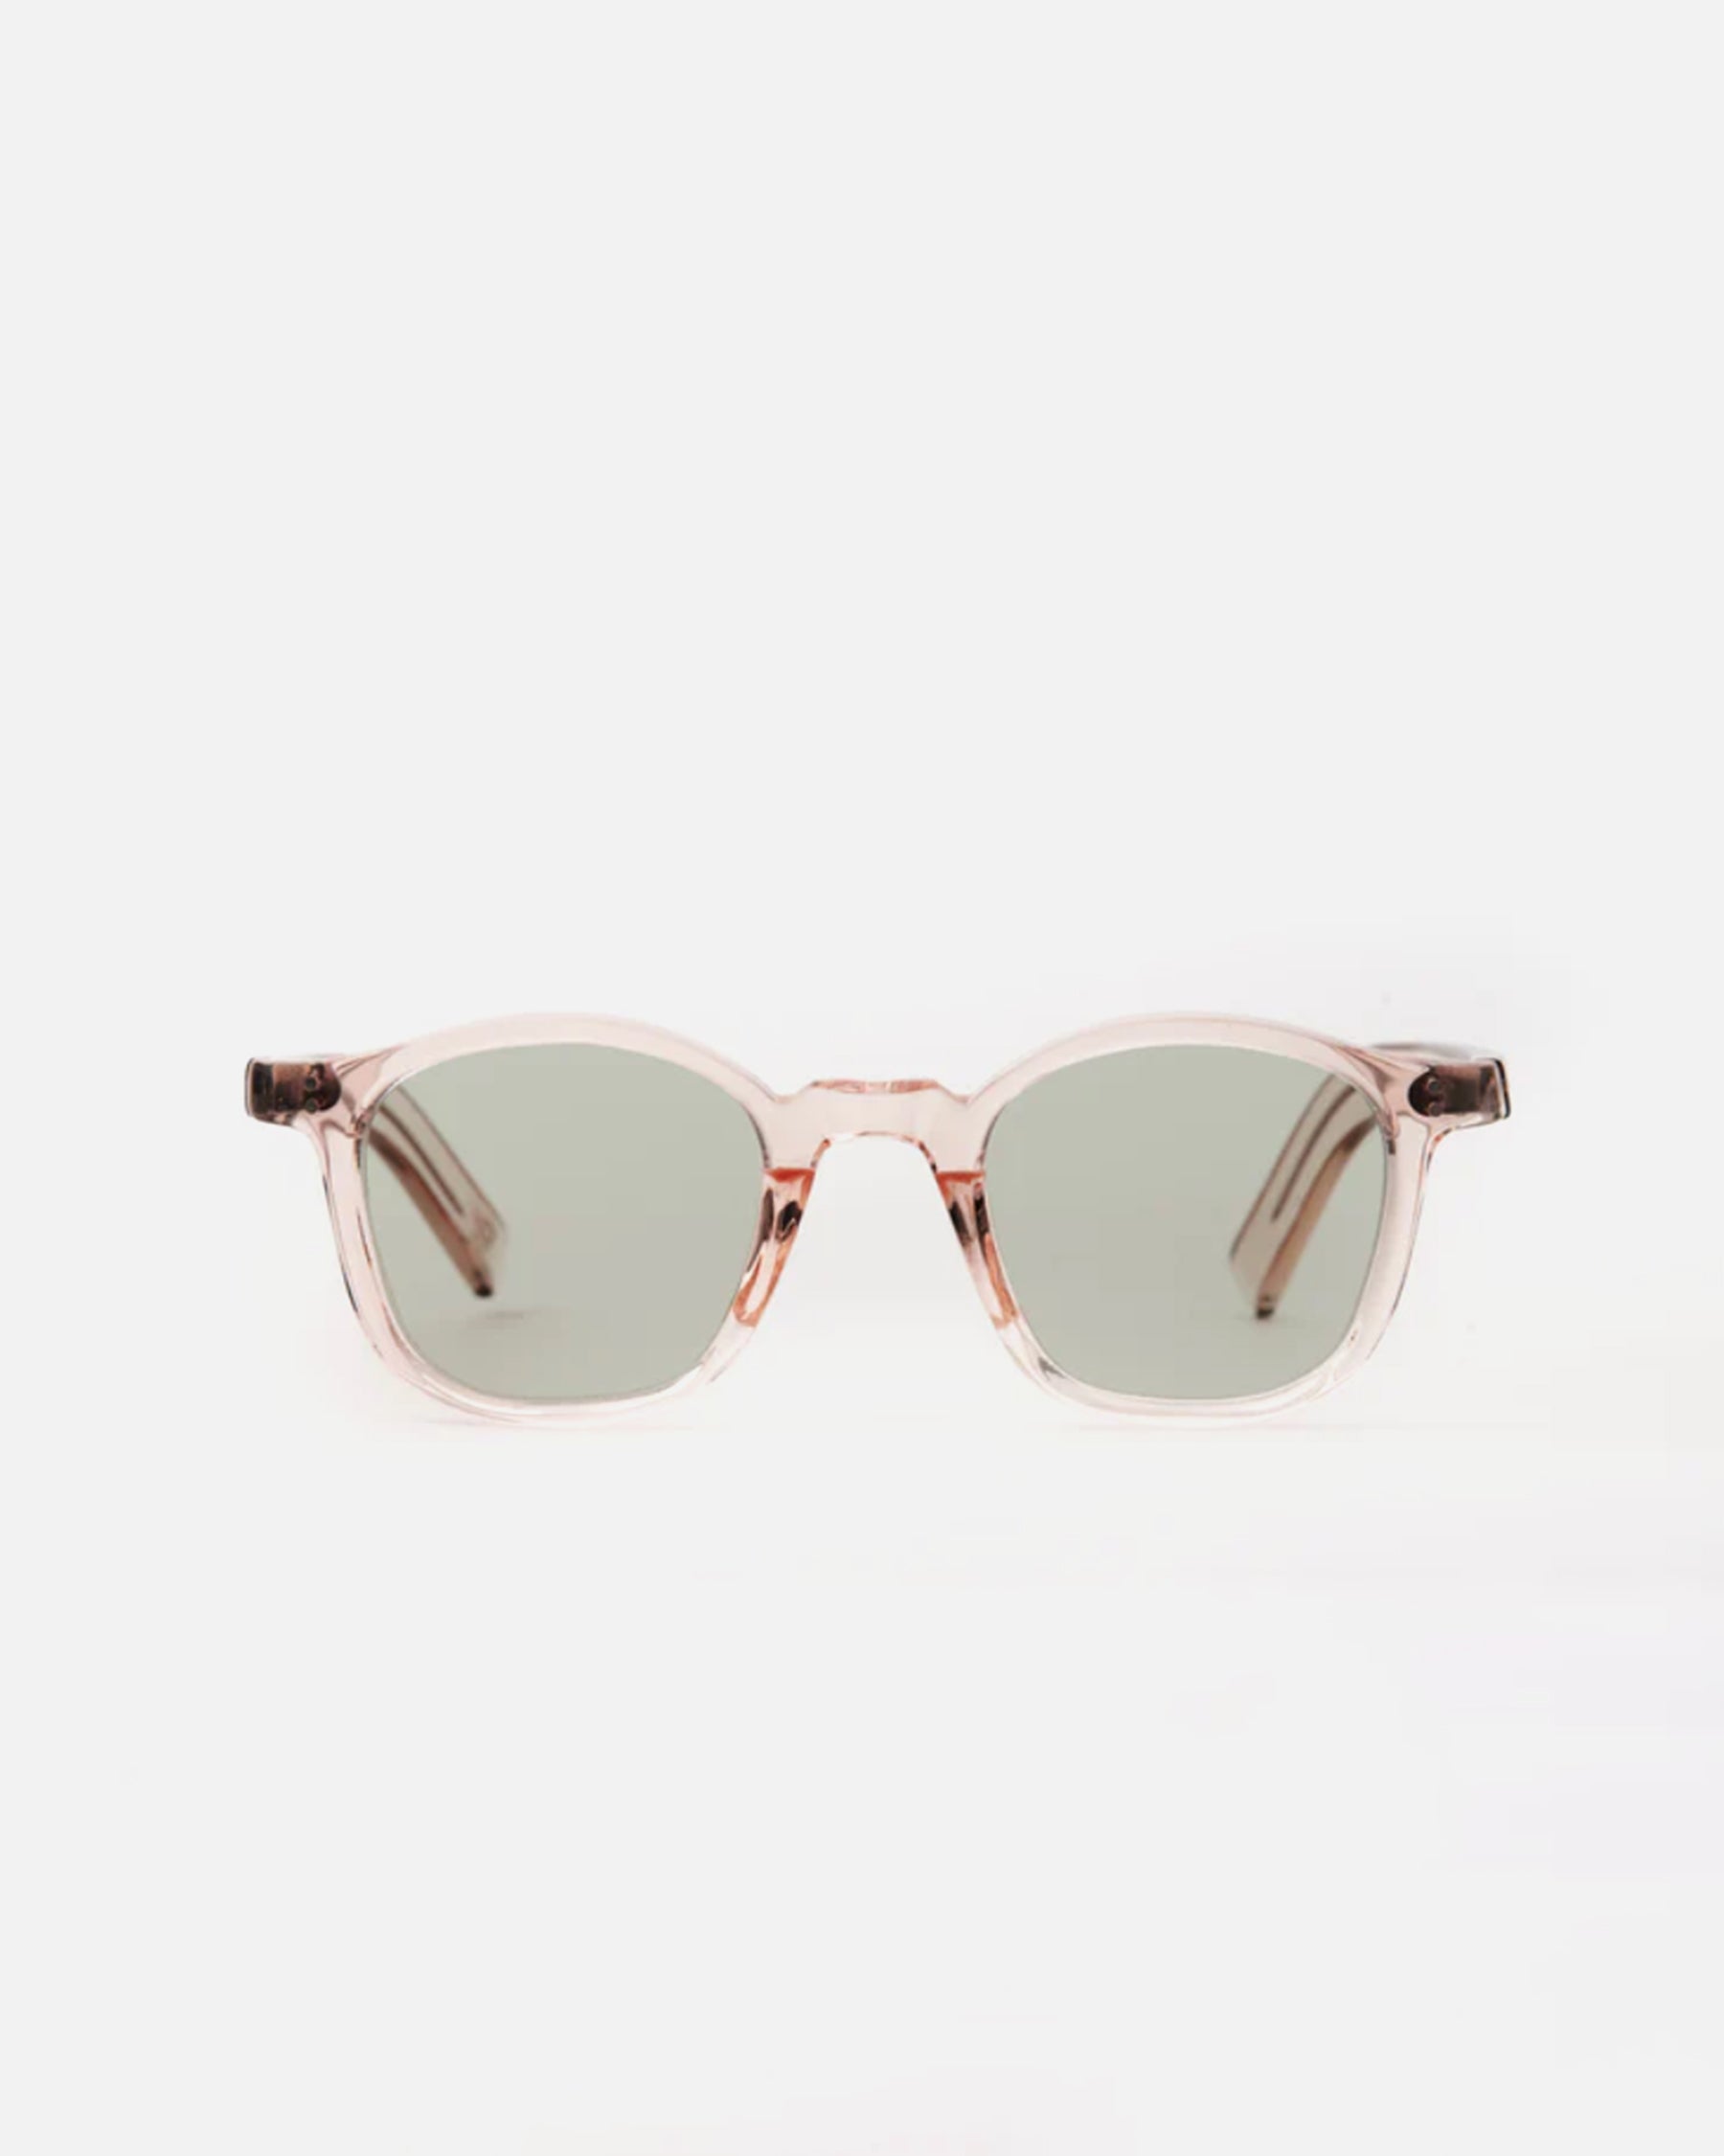 gp-01 Sunglasses Rose / Lens: Green